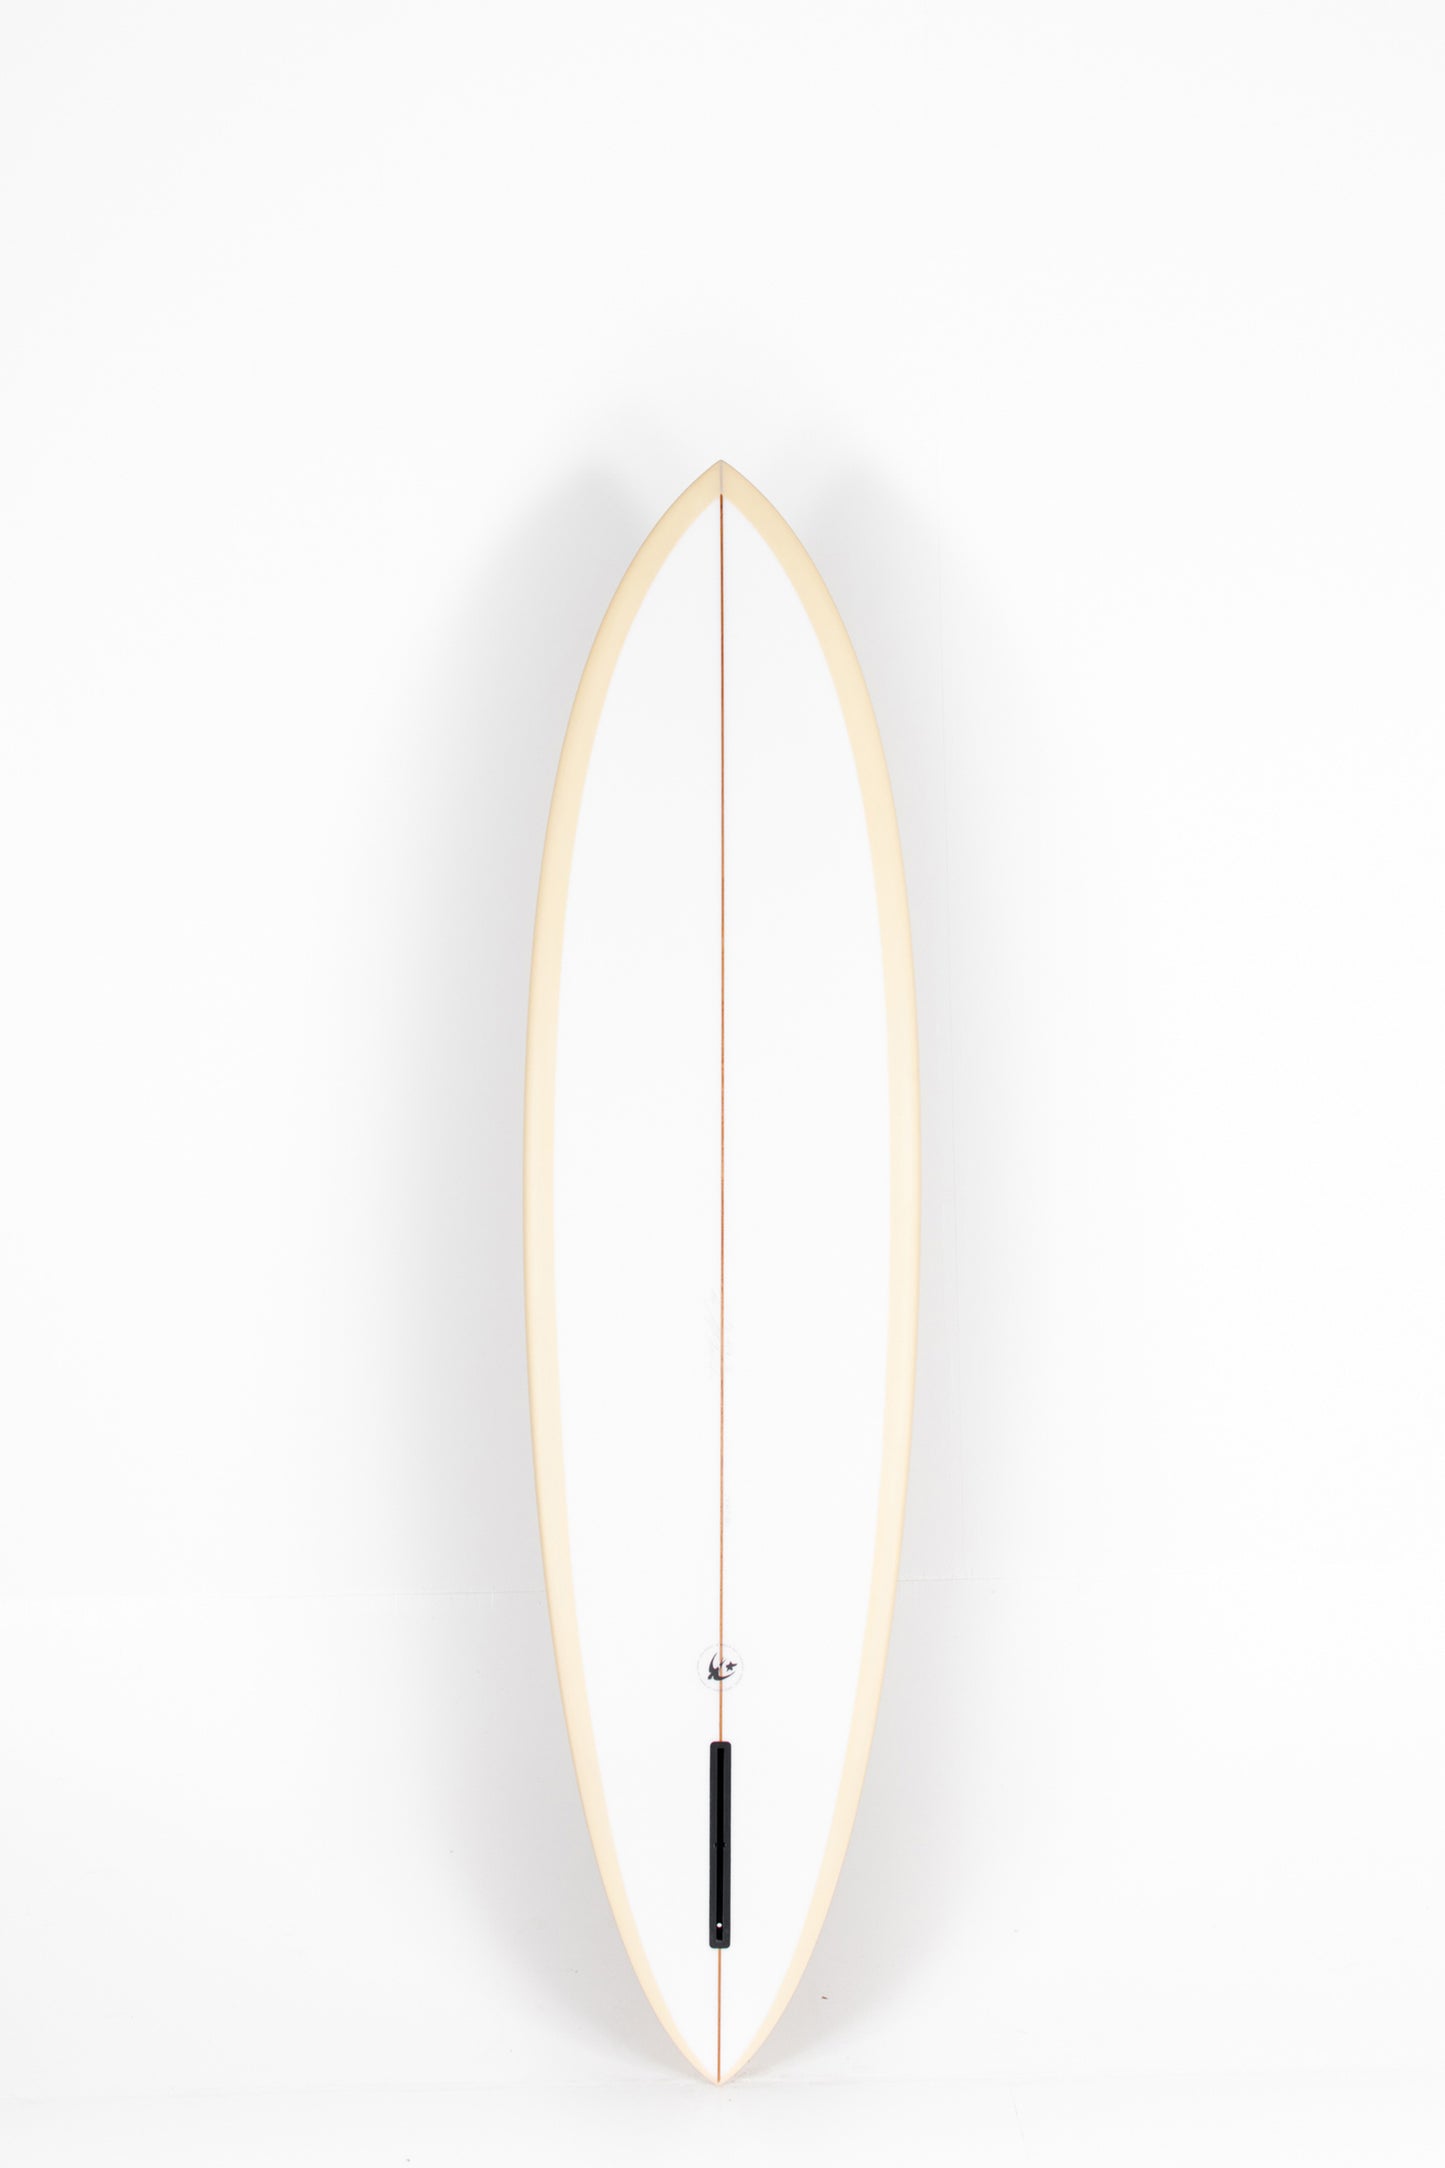 Pukas Surf Shop - McTavish Surfboard - TRACKER by Bob McTavish - 7´3" x 21 x 3 - BM00648